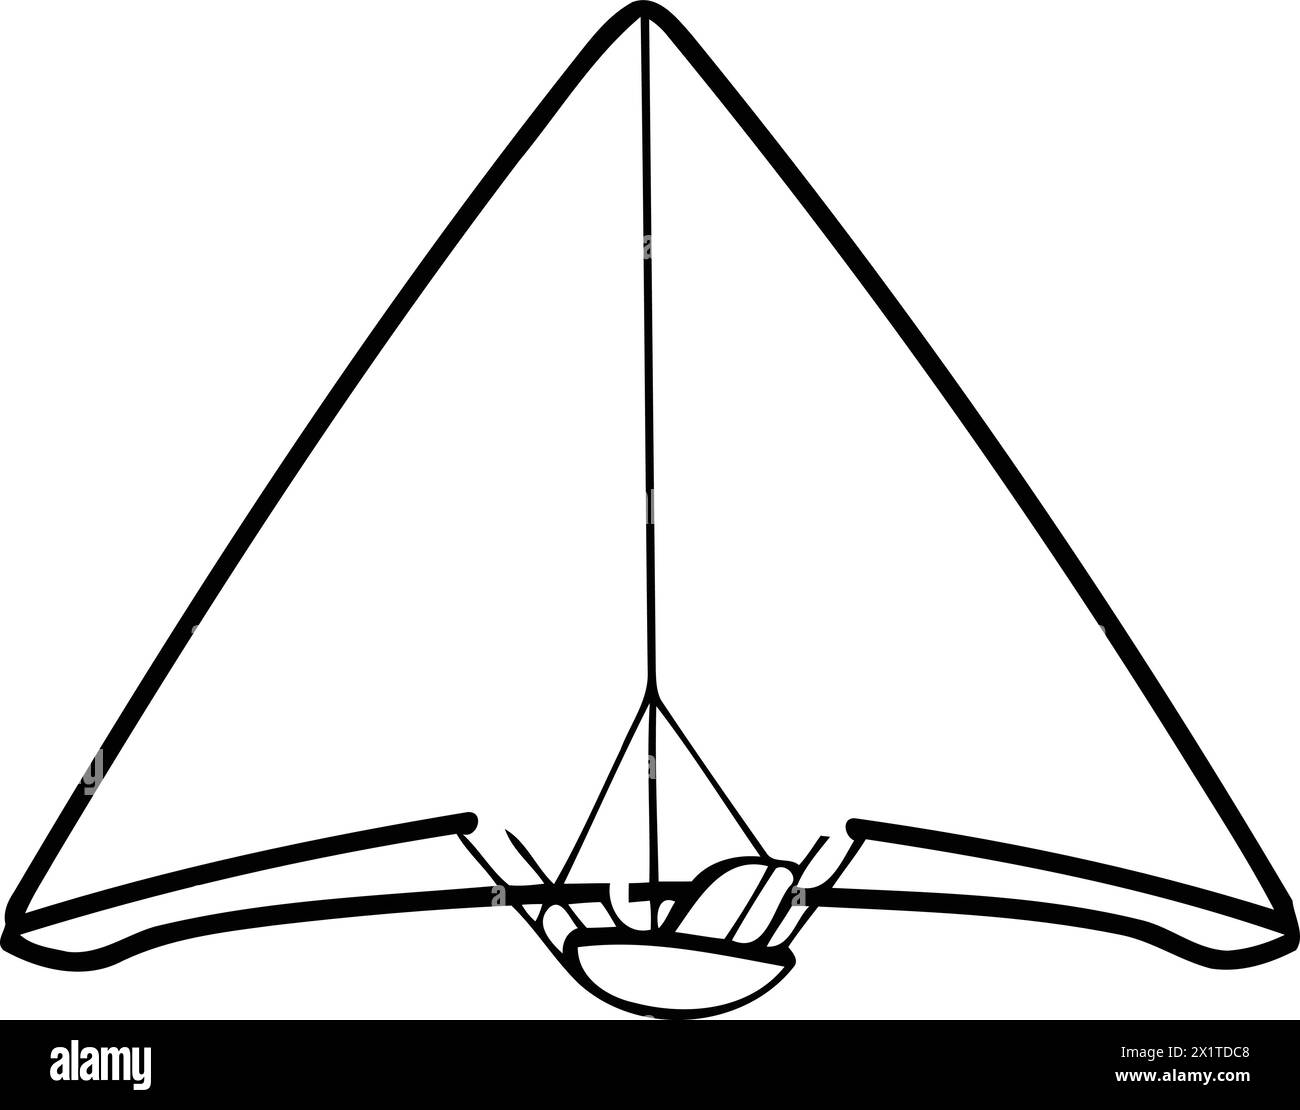 Hang glider icon. Vector illustration of a hang glider. Stock Vector